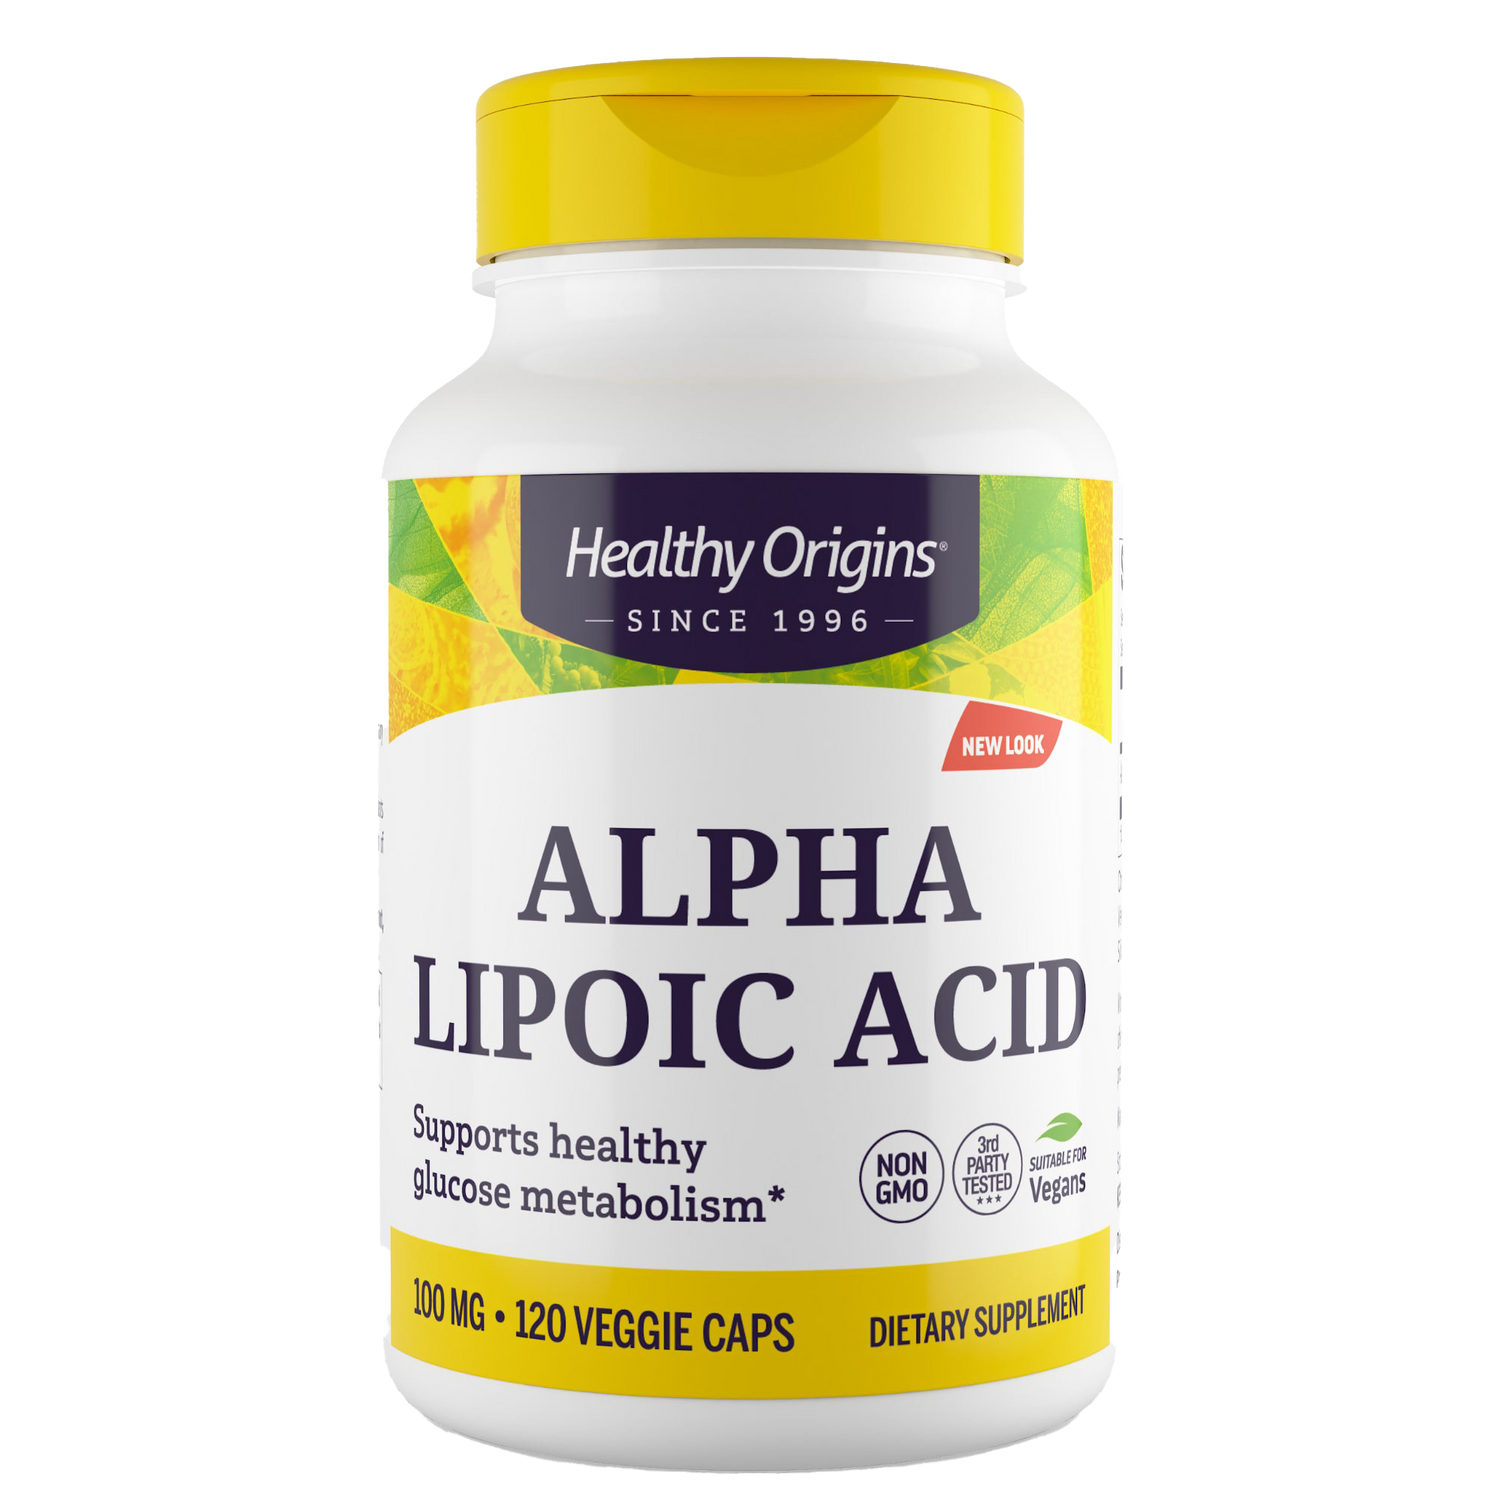 Alpha Lipoic Acid 100mg